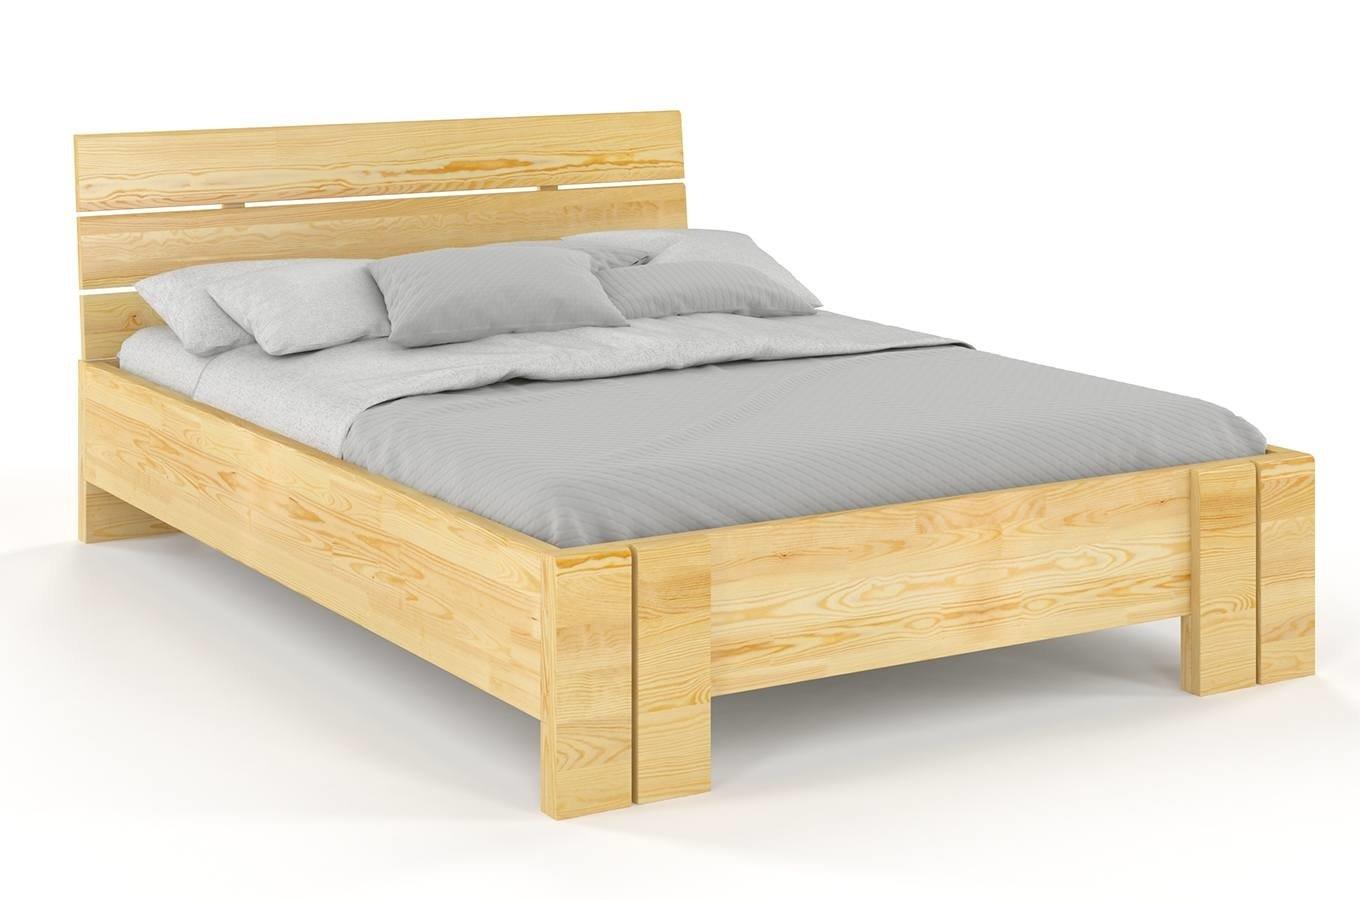 Łóżko drewniane sosnowe Visby Arhus High / 160x200 cm, kolor naturalny